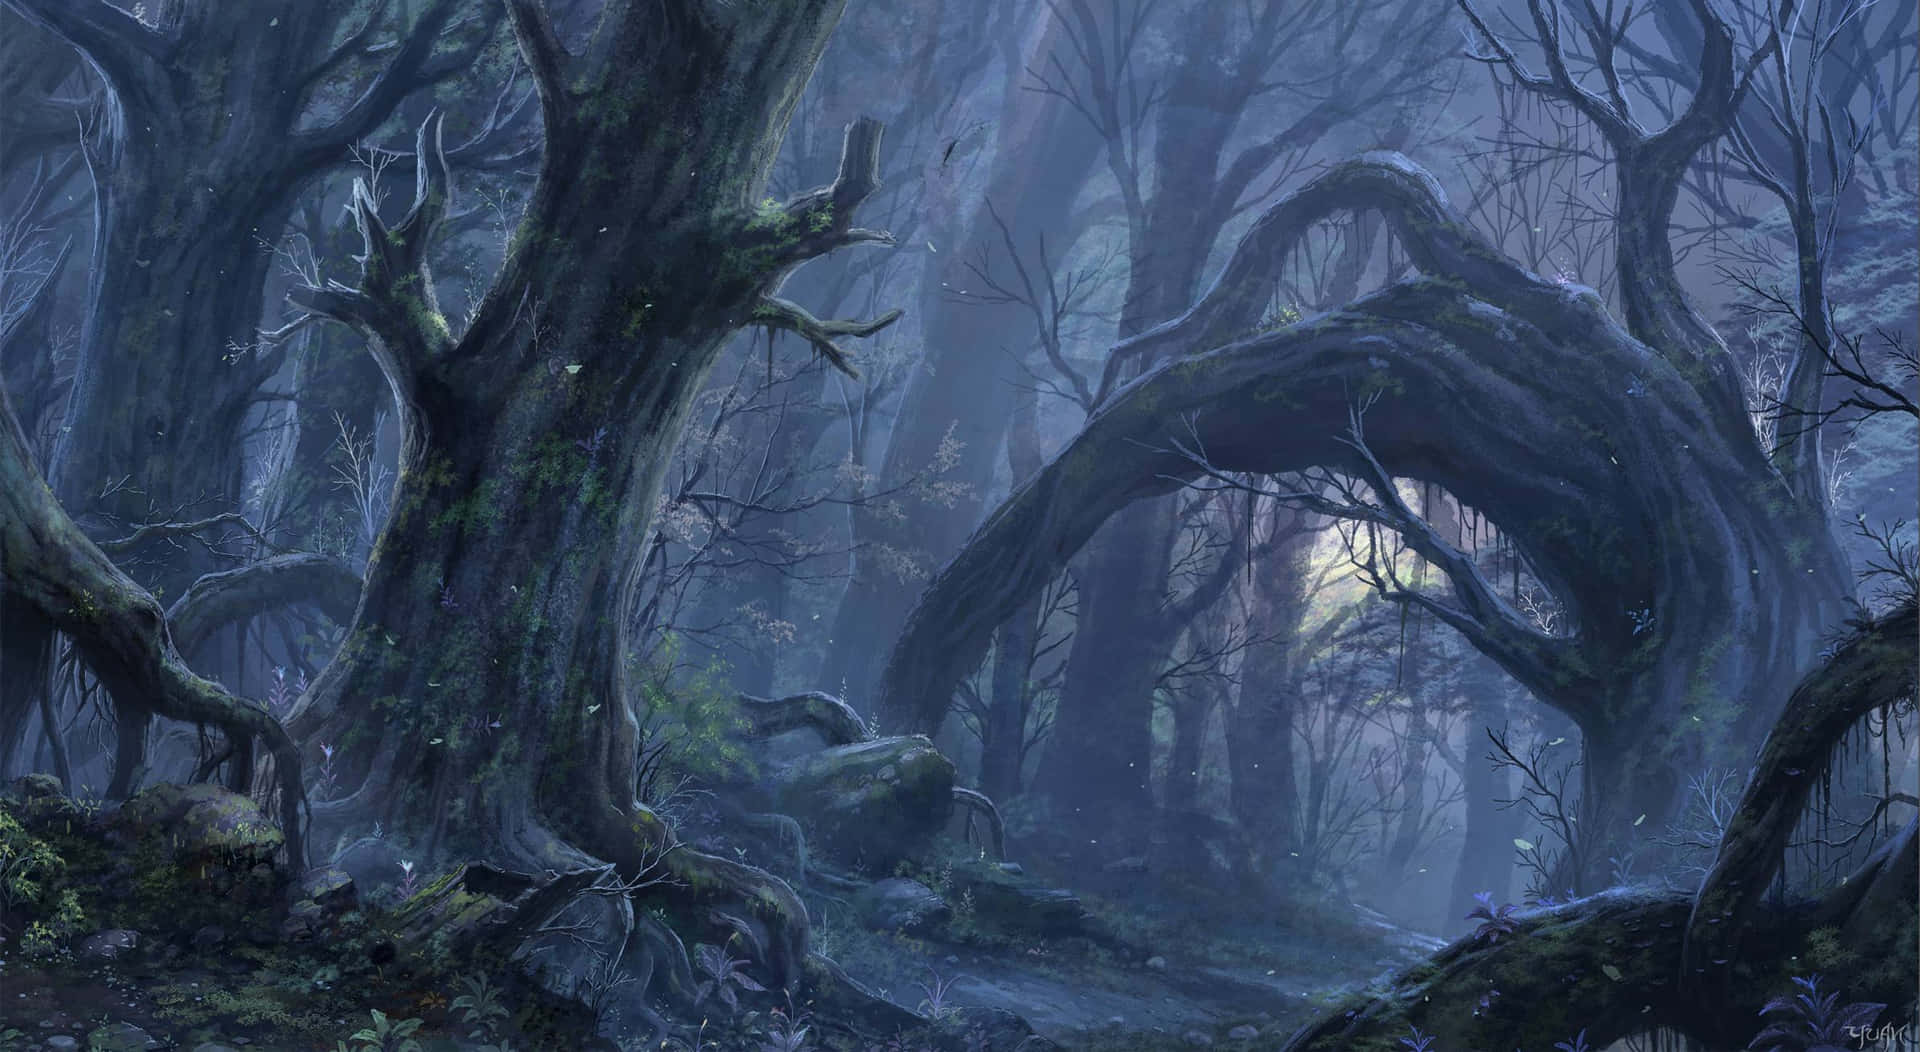 Misty woods create a magical scene